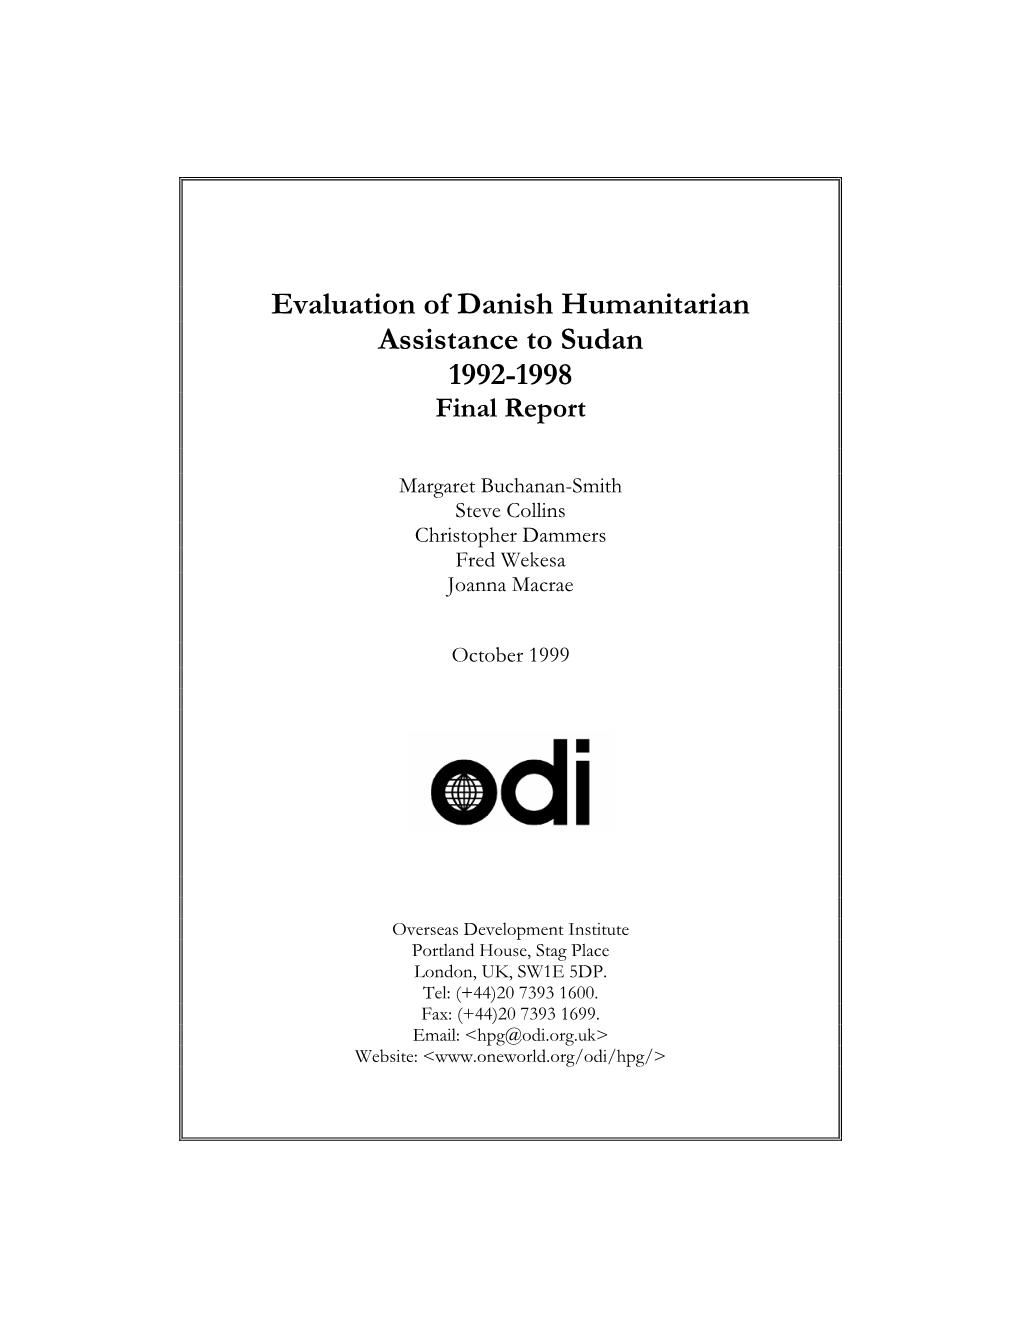 Evaluation of Danish Humanitarian Assistance to Sudan 1992-98